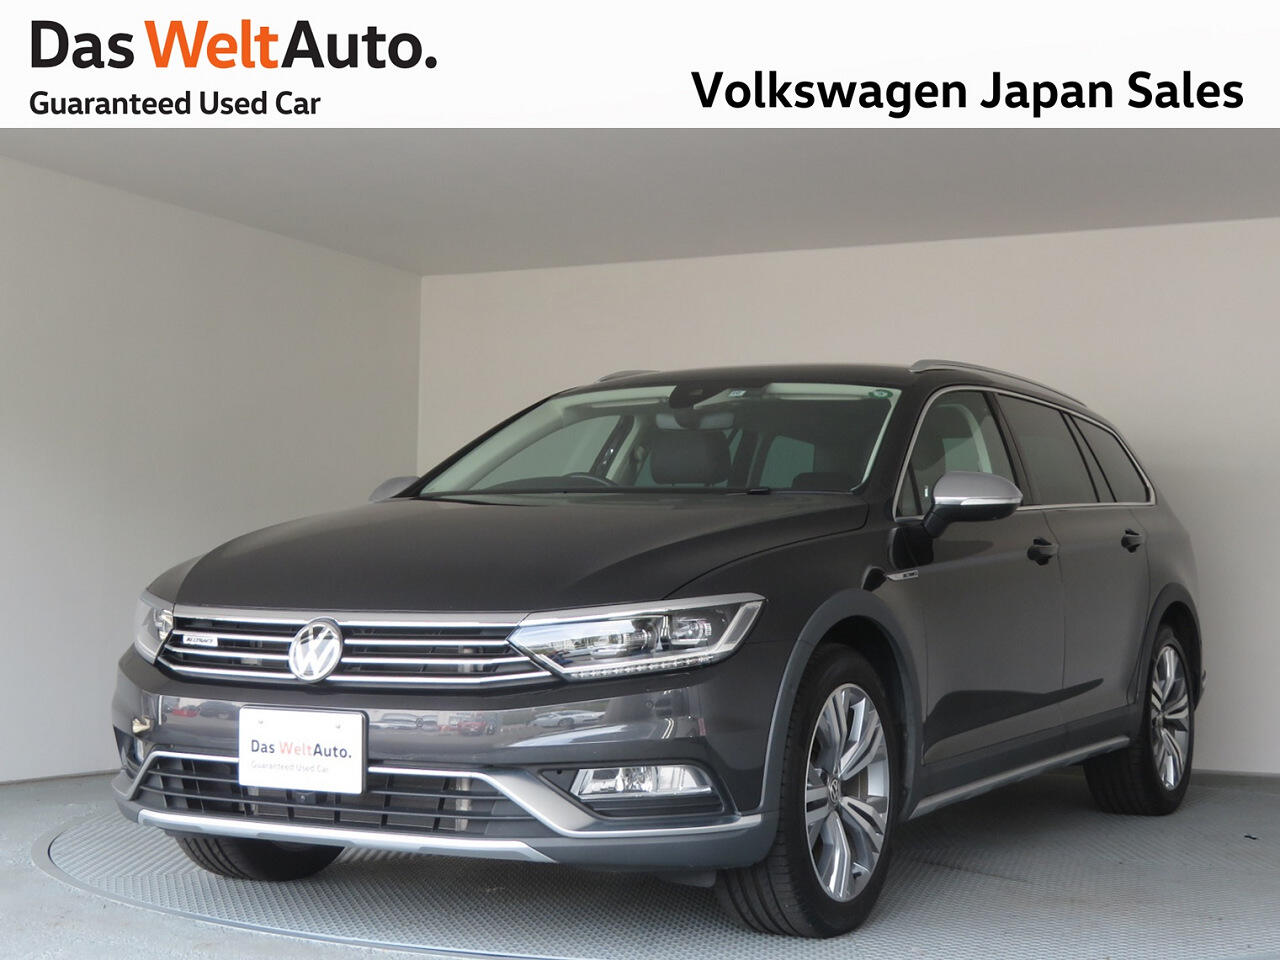 Top Volkswagen世田谷 認定中古車センター Volkswagen Setagaya Guaranteed Used Car Center